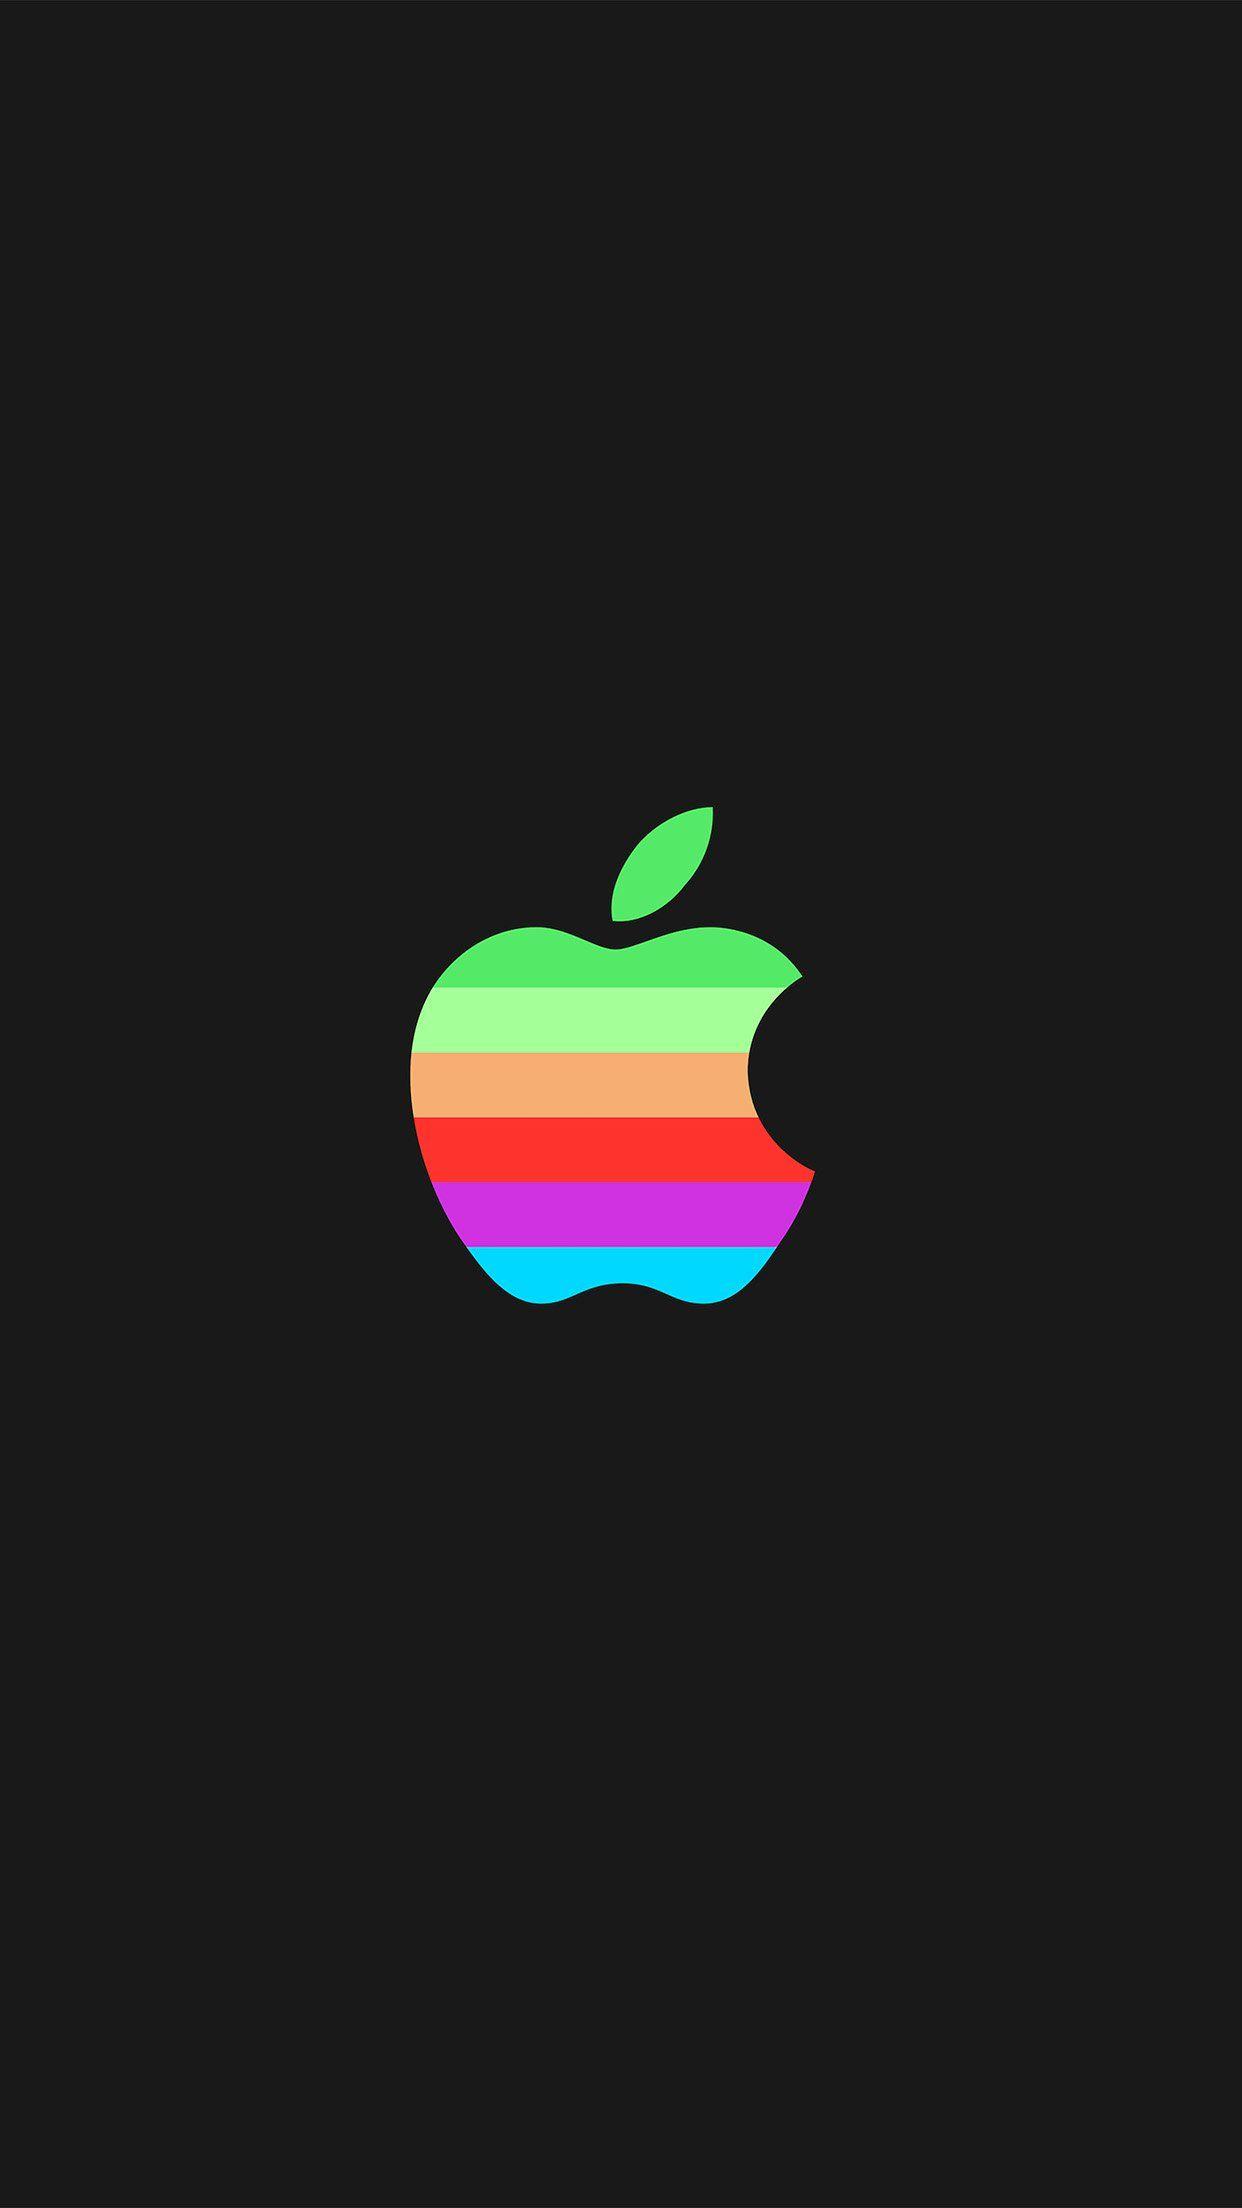 Rainbow Apple Logo Iphone Wallpapers Top Free Rainbow Apple Logo Iphone Backgrounds Wallpaperaccess